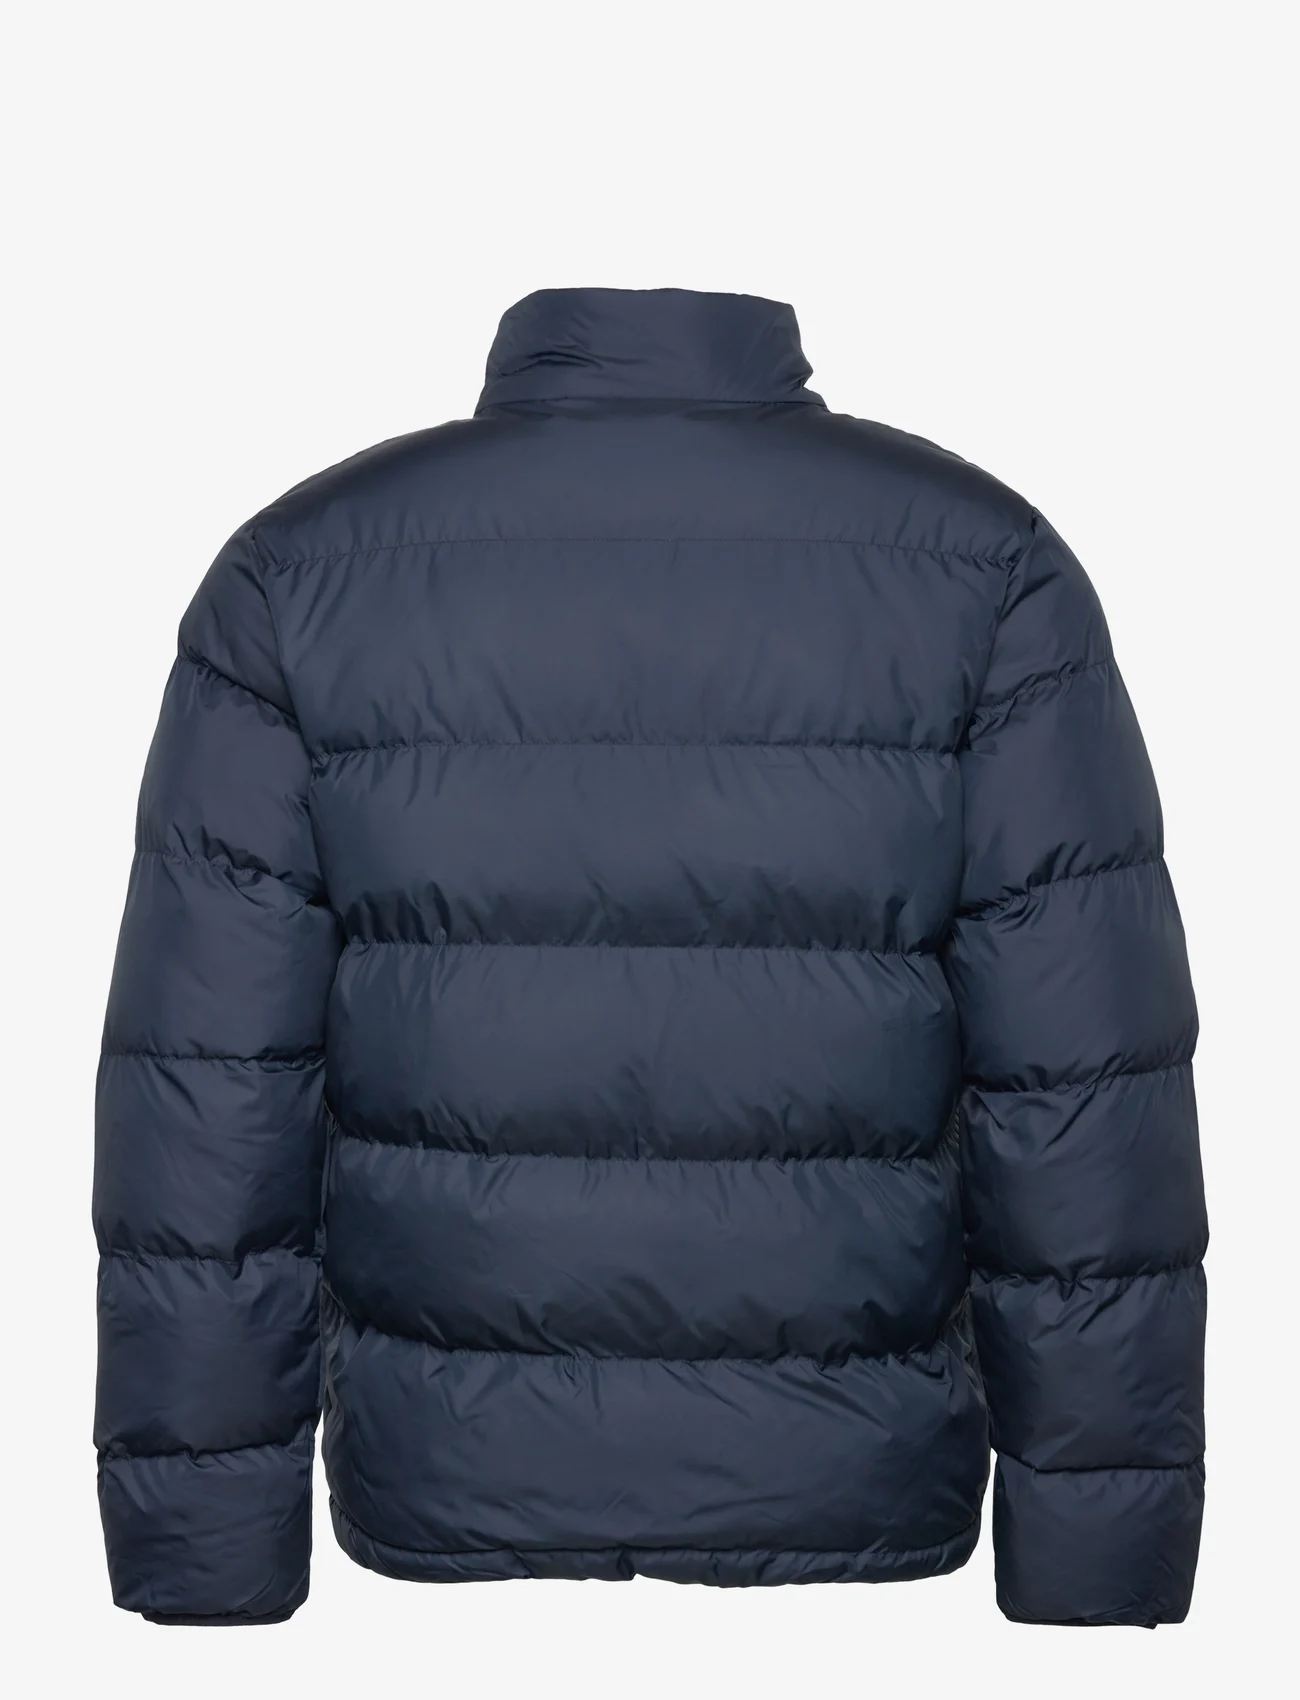 U.S. Polo Assn. - Henrik MID NY USPA M OTW - winter jackets - dark sapphire - 1